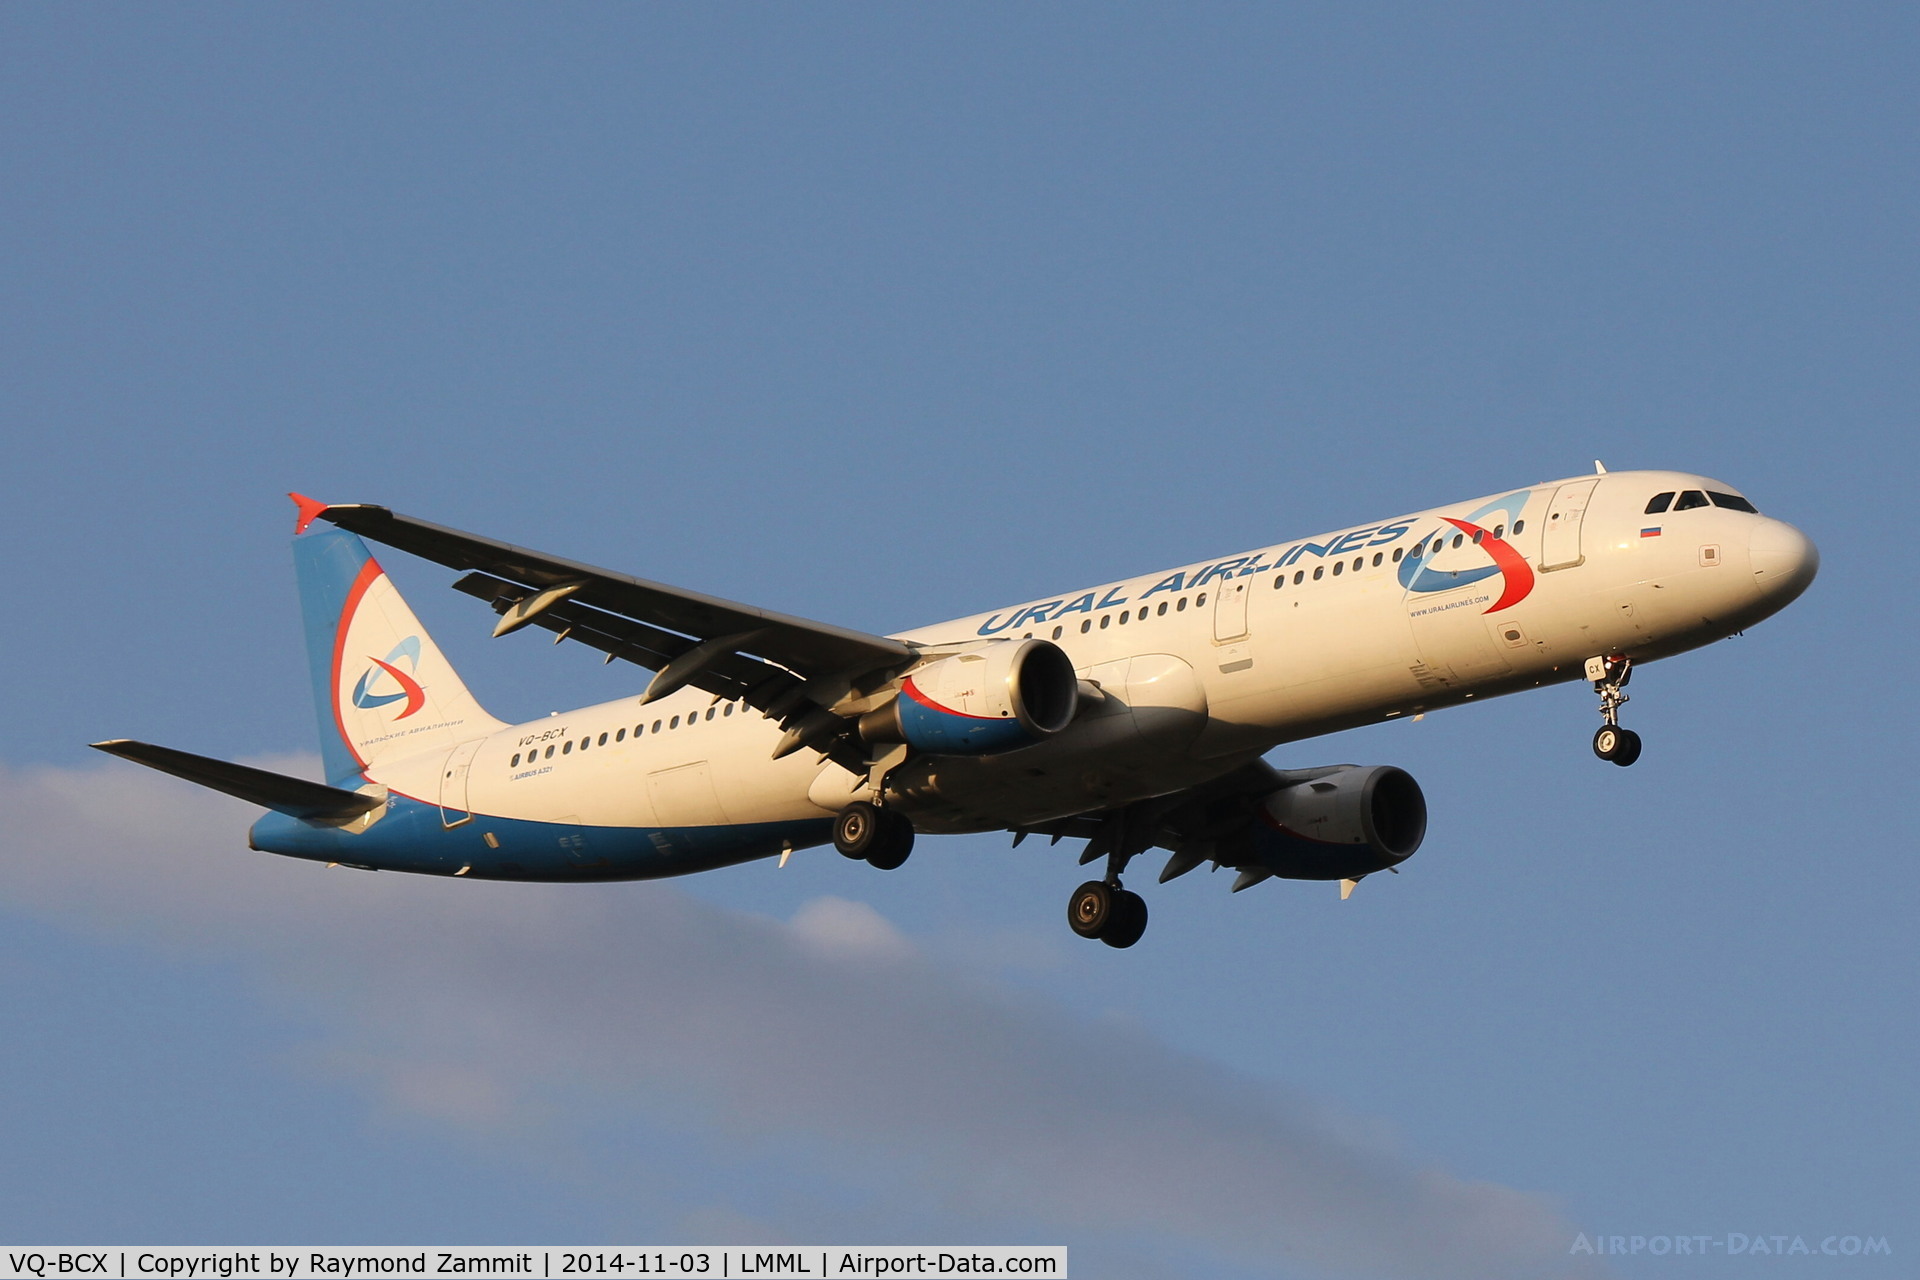 VQ-BCX, 2002 Airbus A321-211 C/N 1720, A321 VQ-BCX Ural Airlines